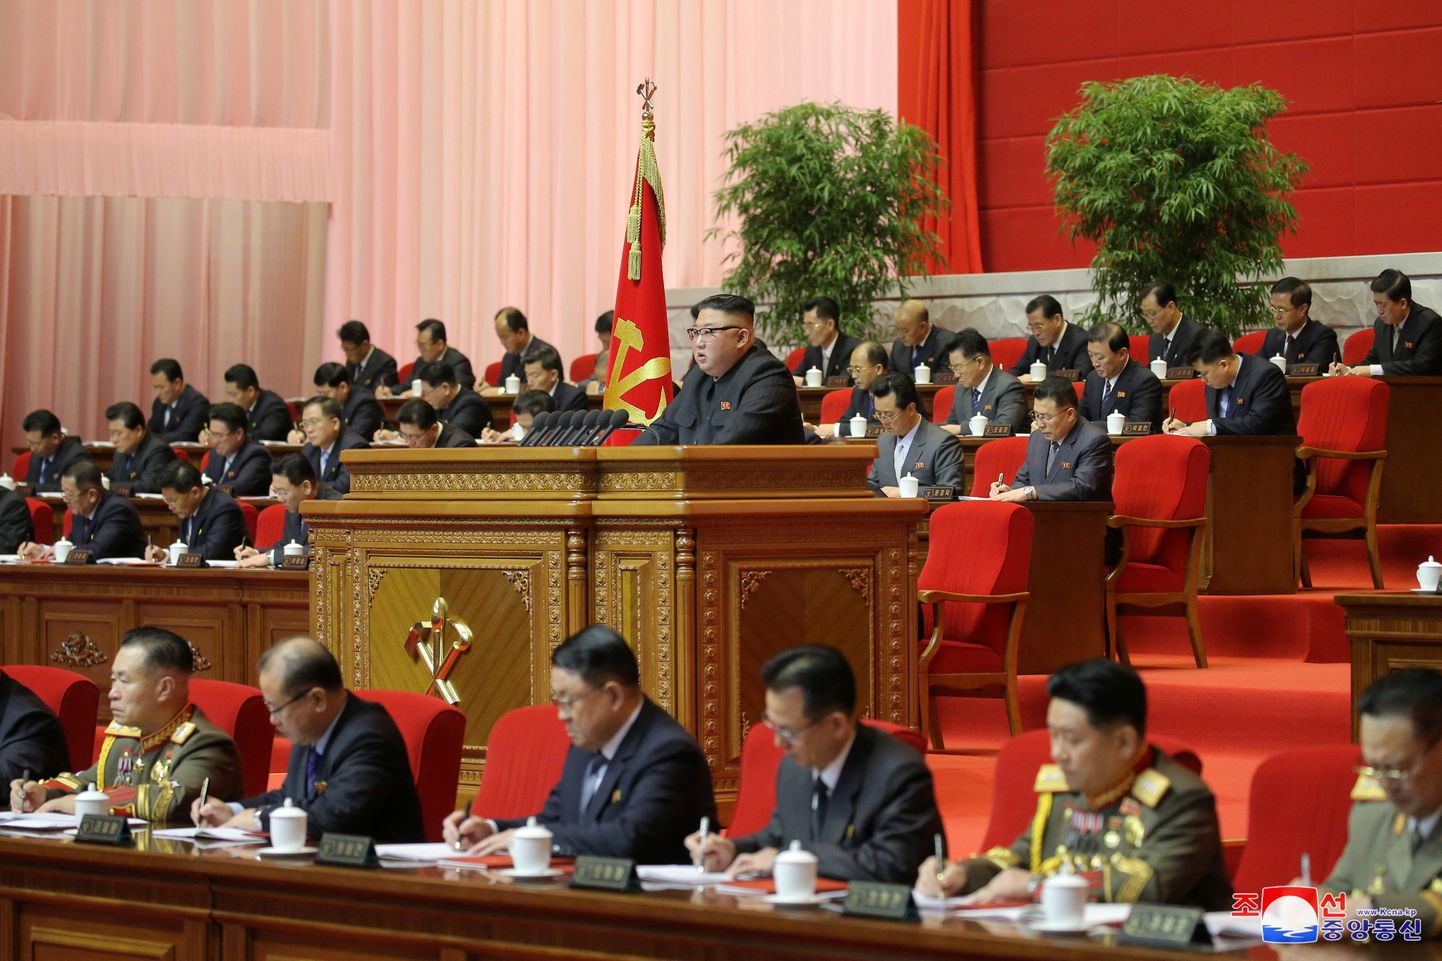 Põhja-Korea liider Kim Jong-un osalemas valitseva Töölispartei kongressil.